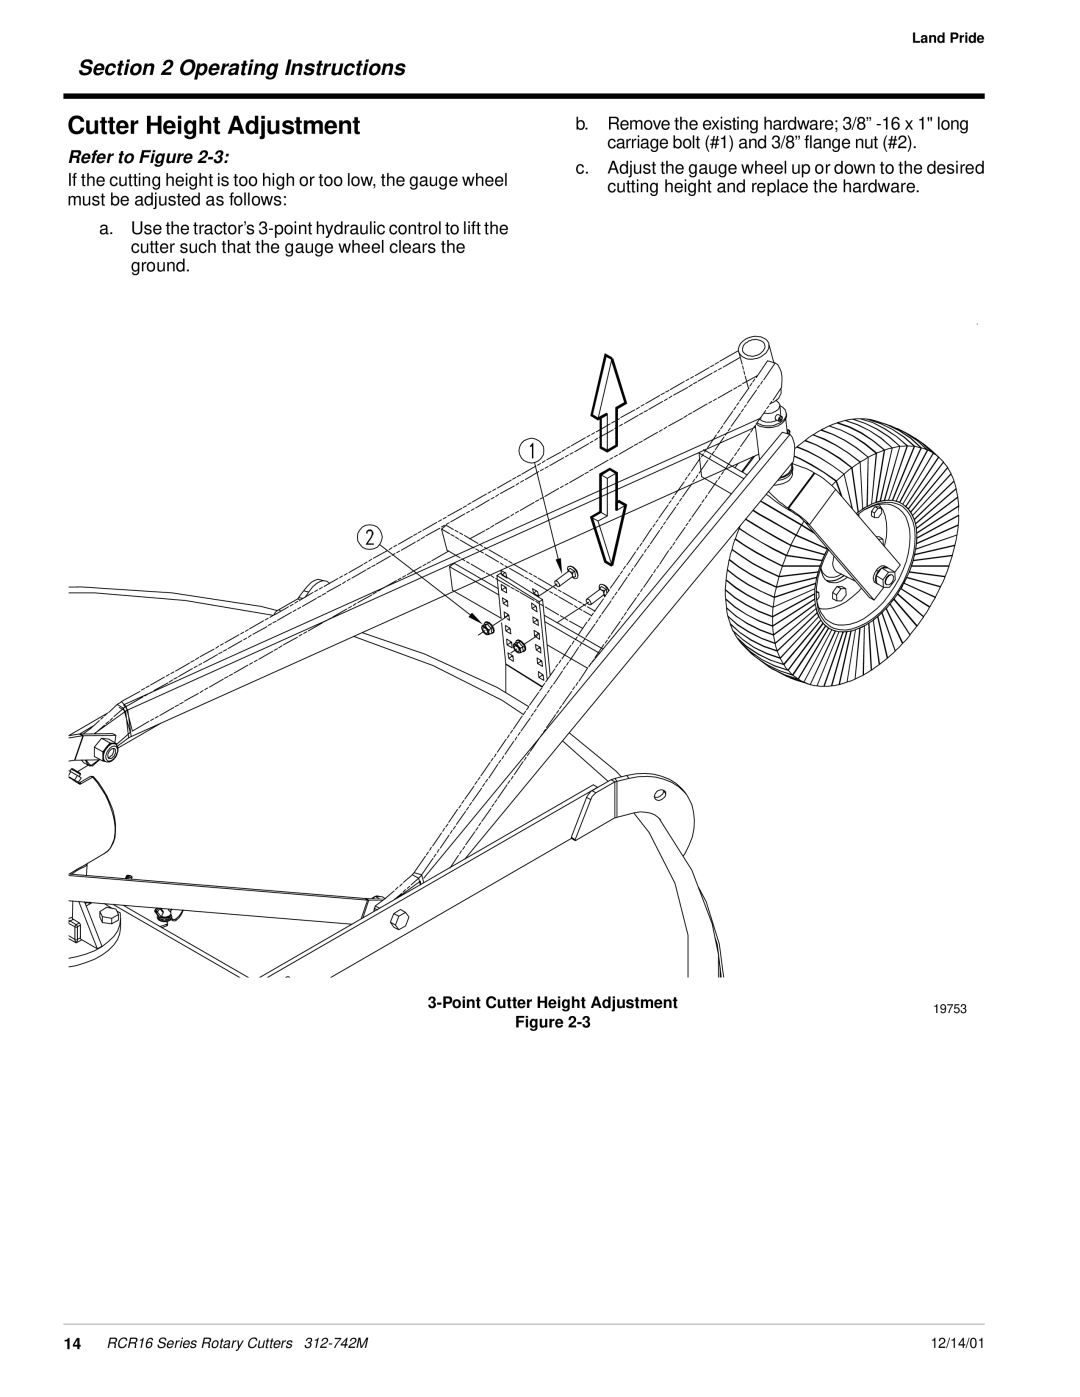 Land Pride RCR16 Series manual Cutter Height Adjustment 